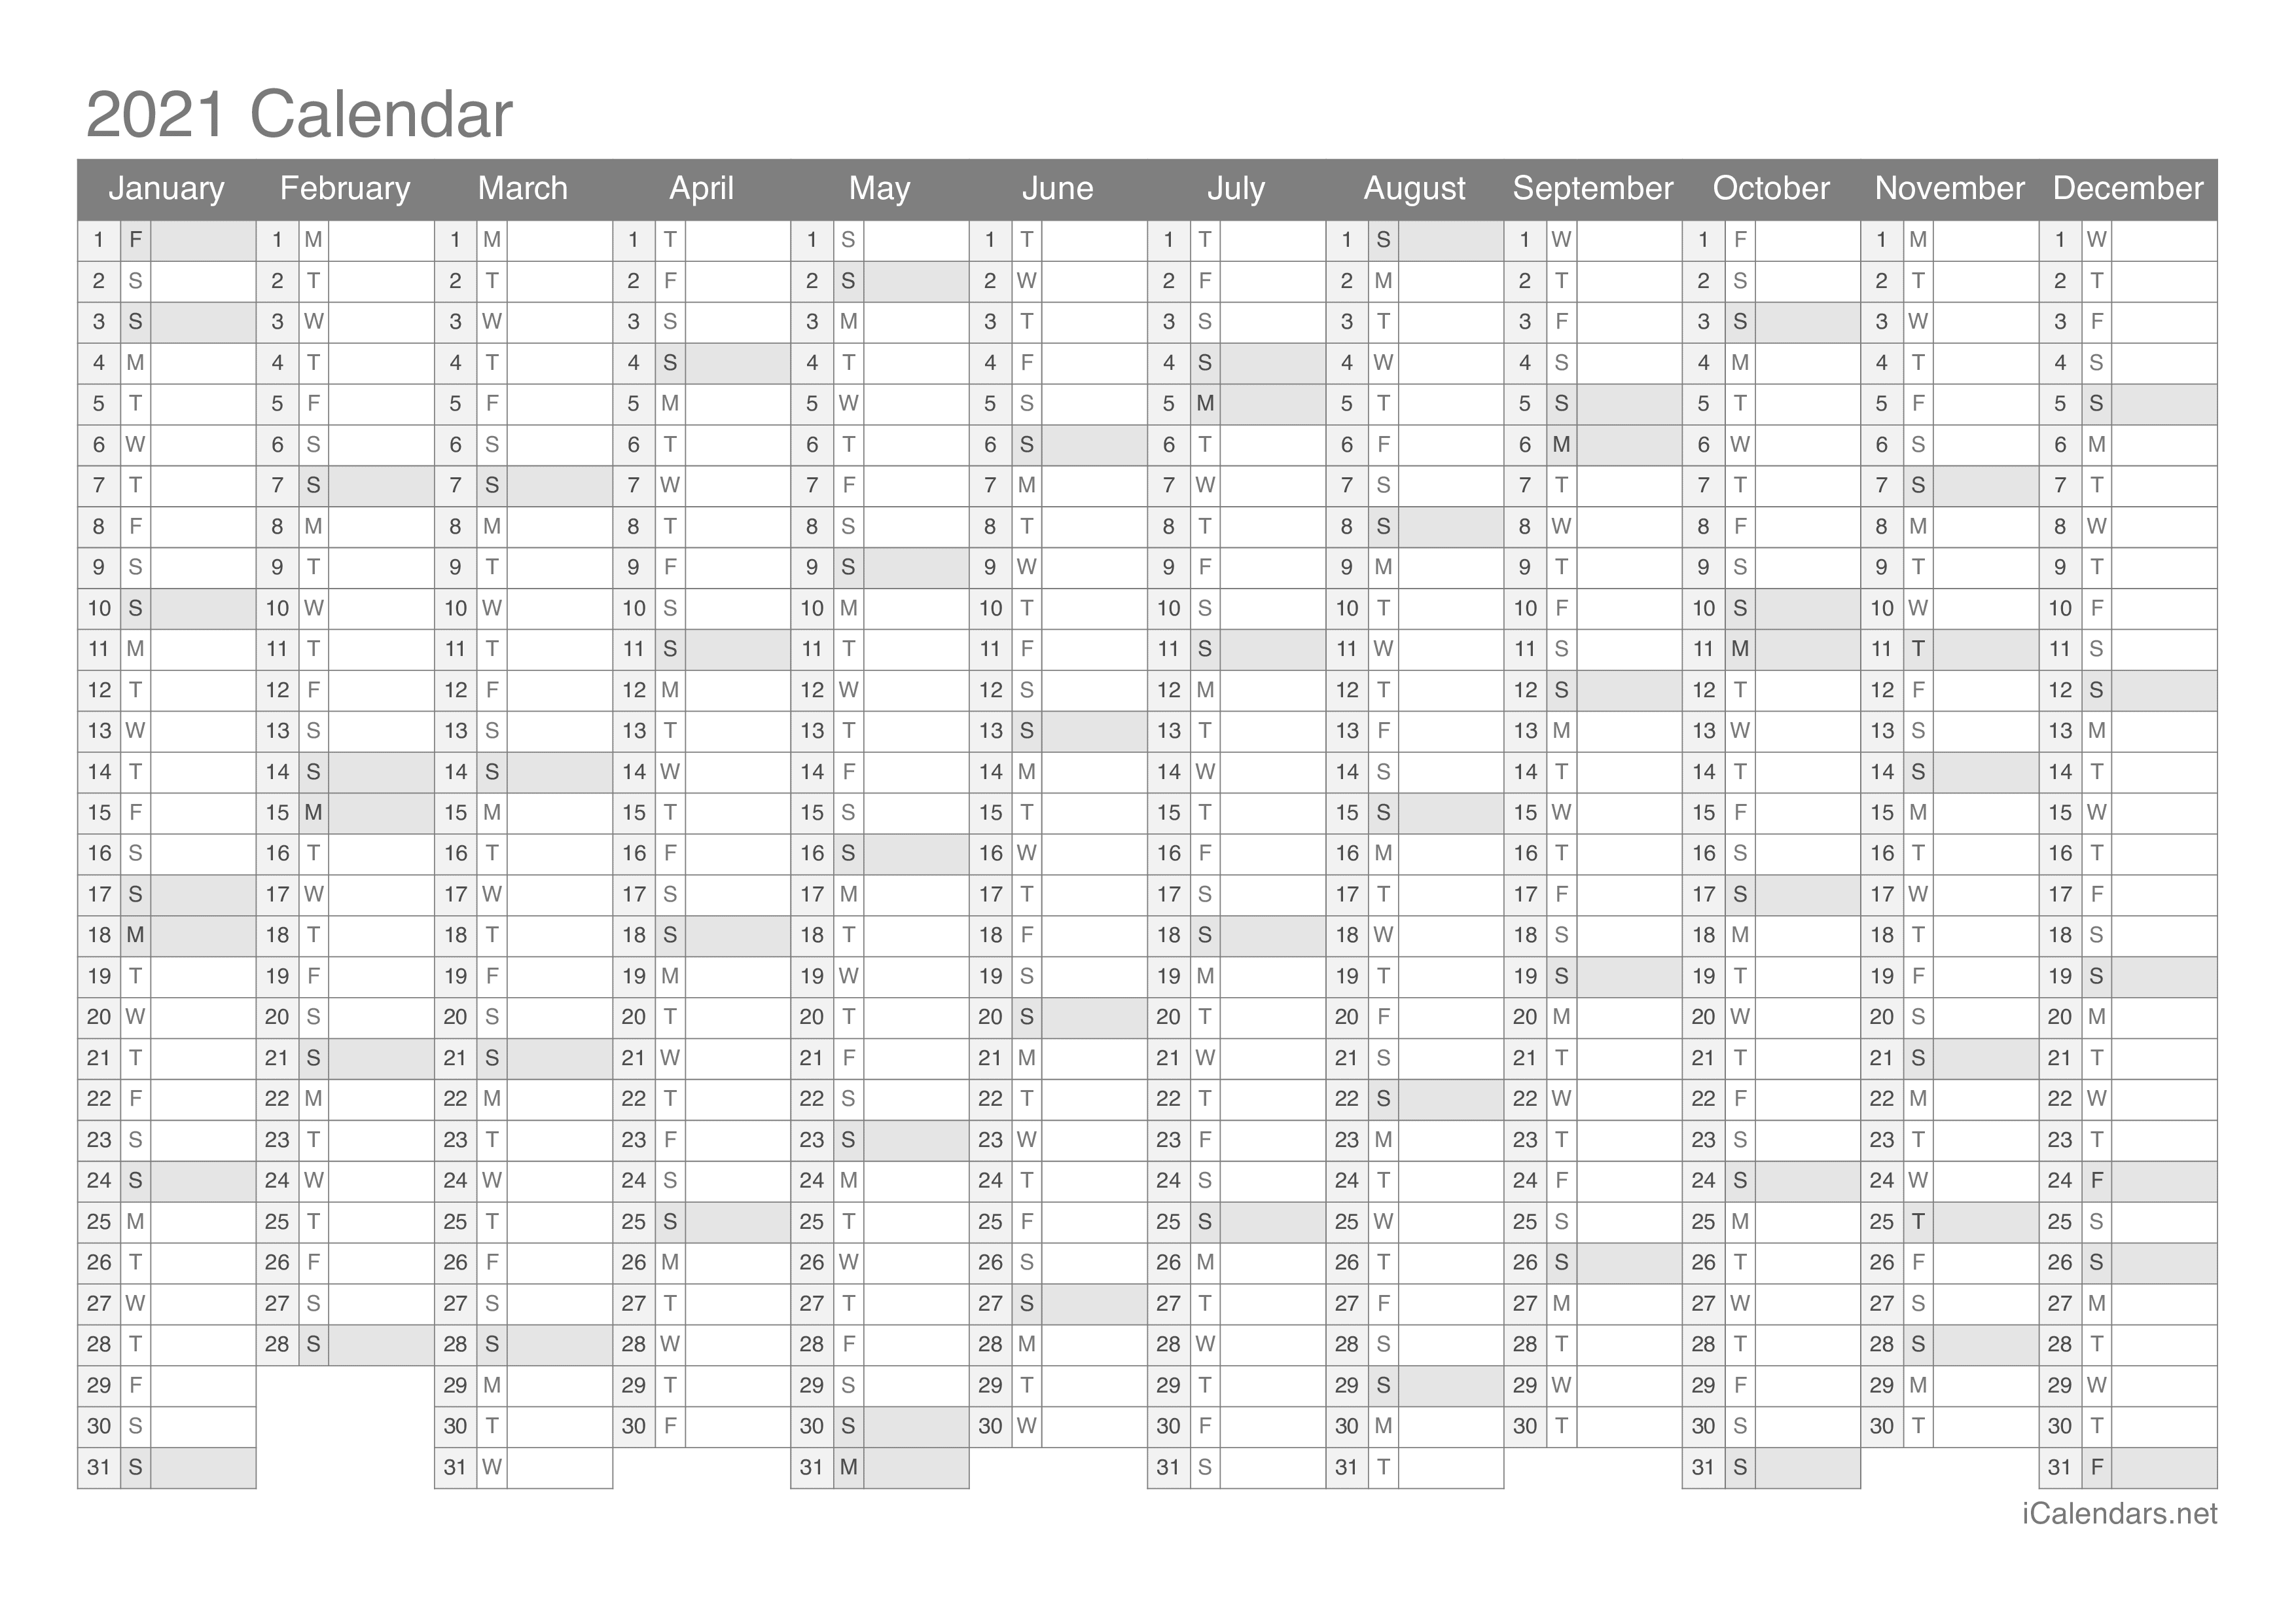 Year Calendar 2021 Printable 2021 Printable Calendar   PDF or Excel   icalendars.net